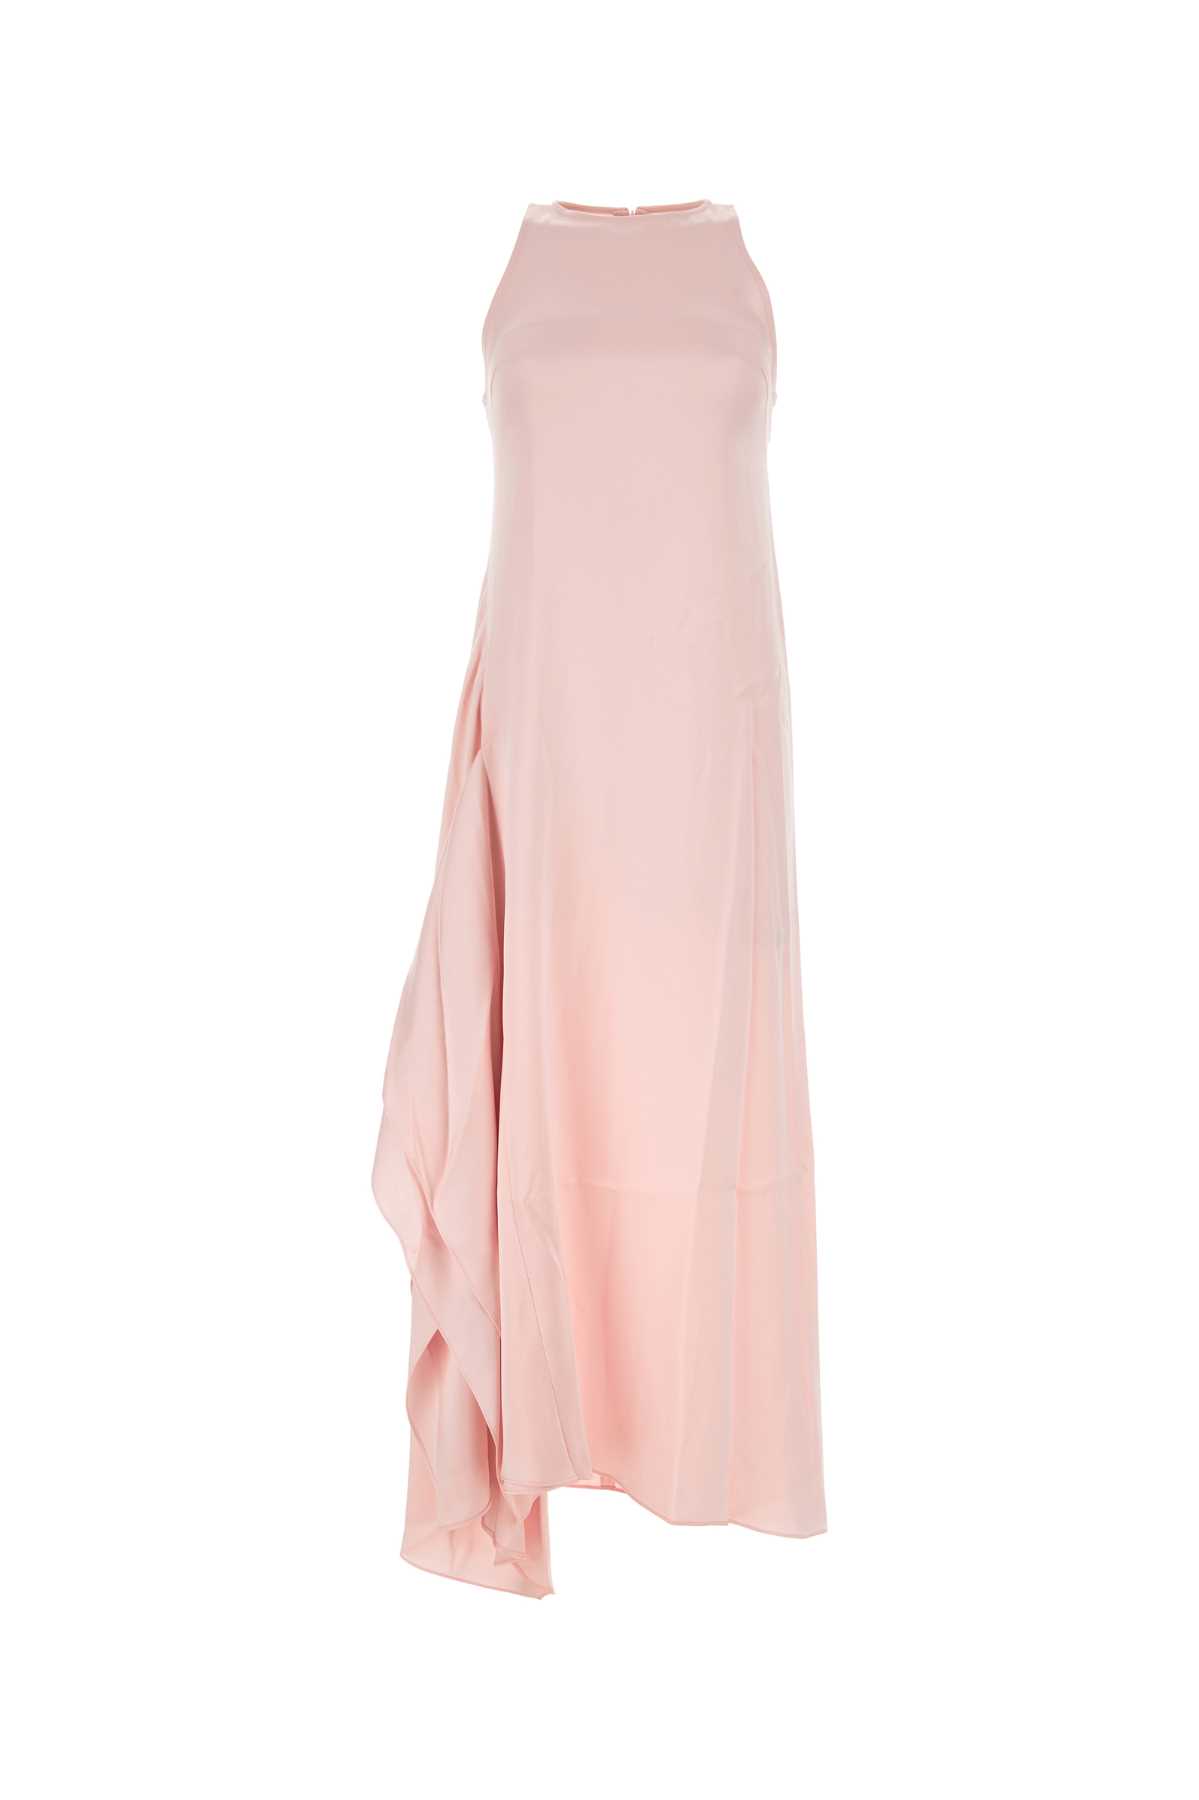 J.W. Anderson Light Pink Satin Dress